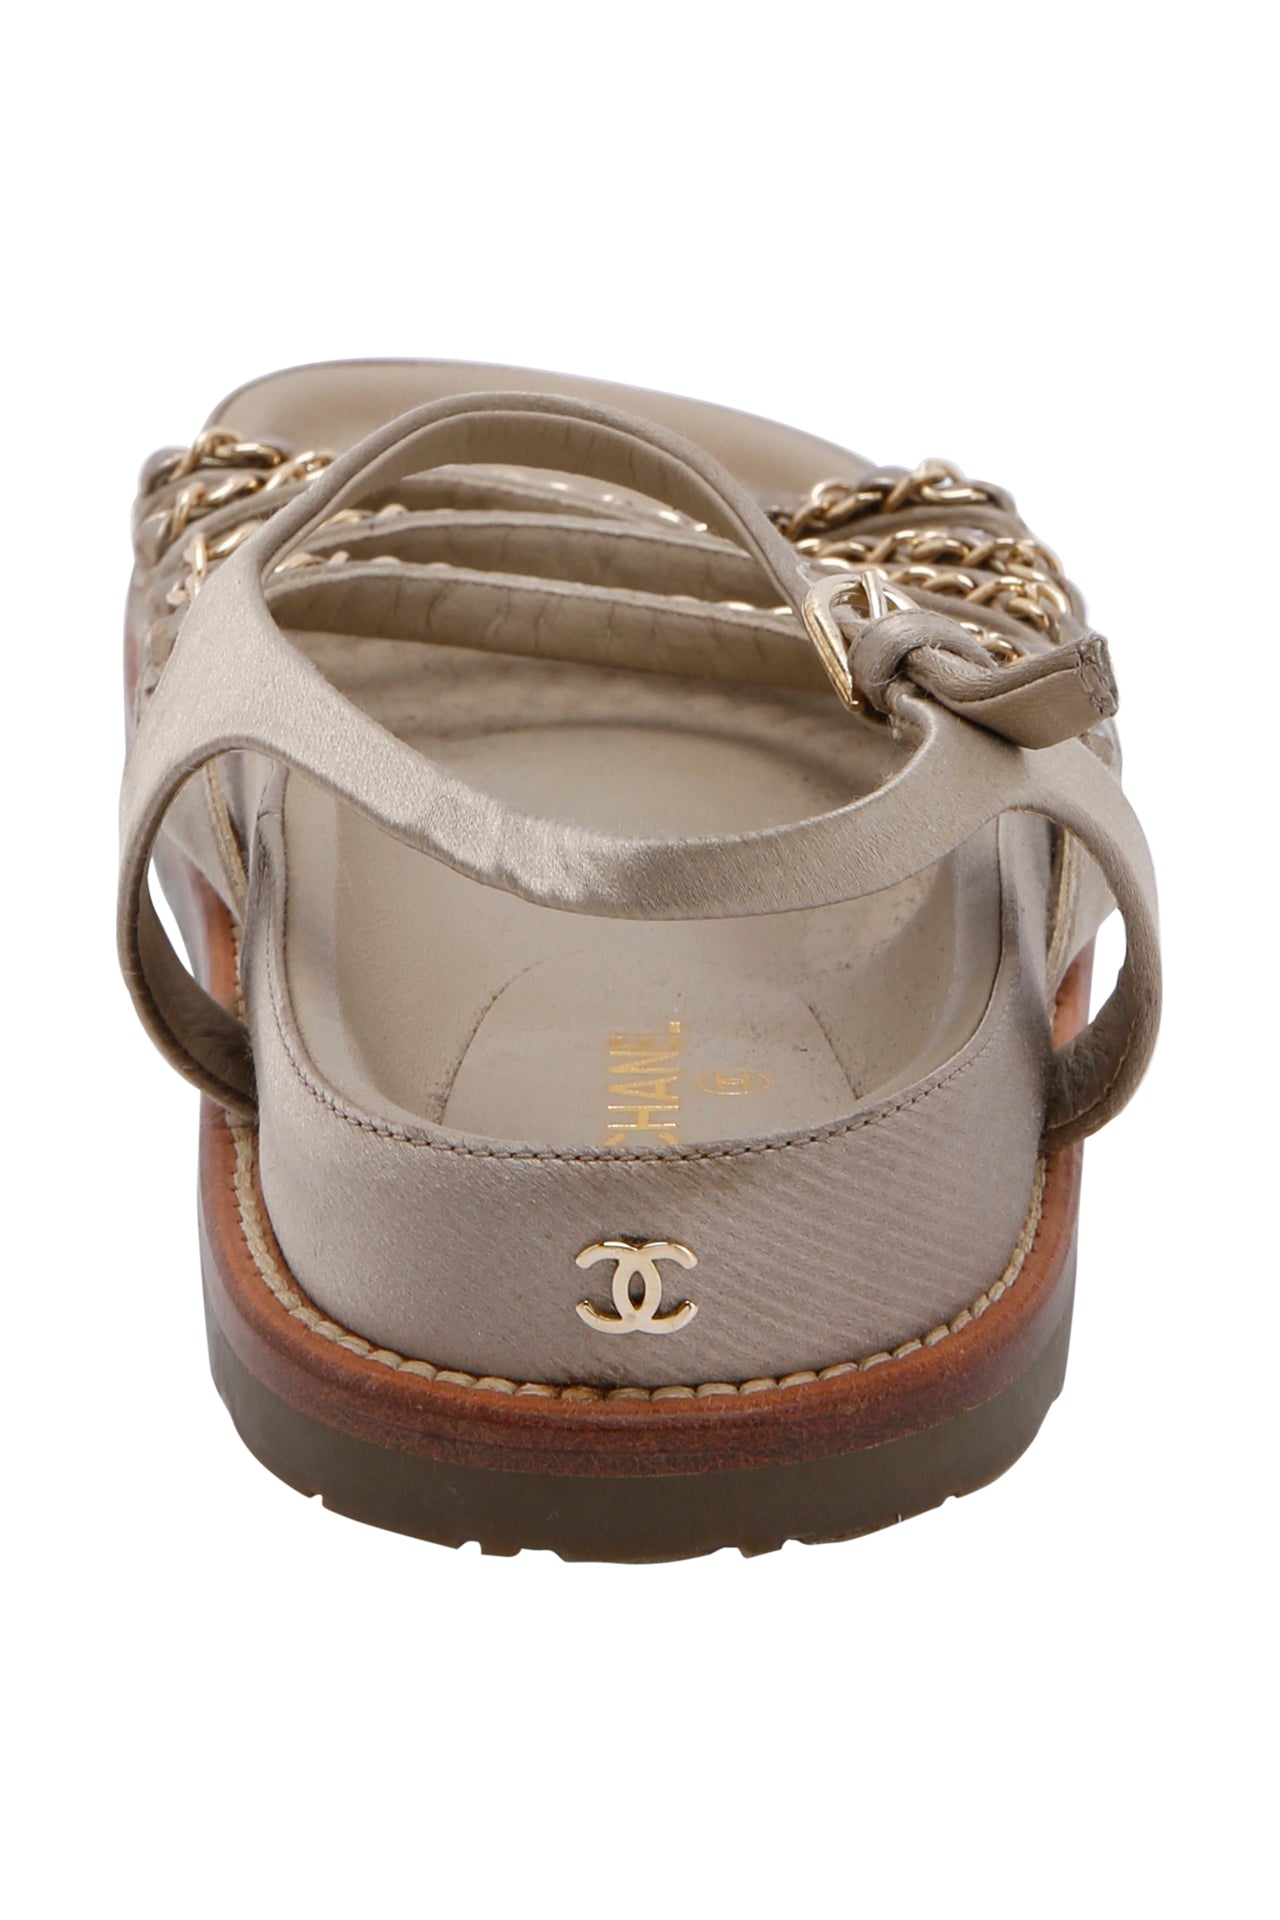 Chanel Beige Satin Chain Detail Ankle Strap Flat Sandals Size EU 38.5